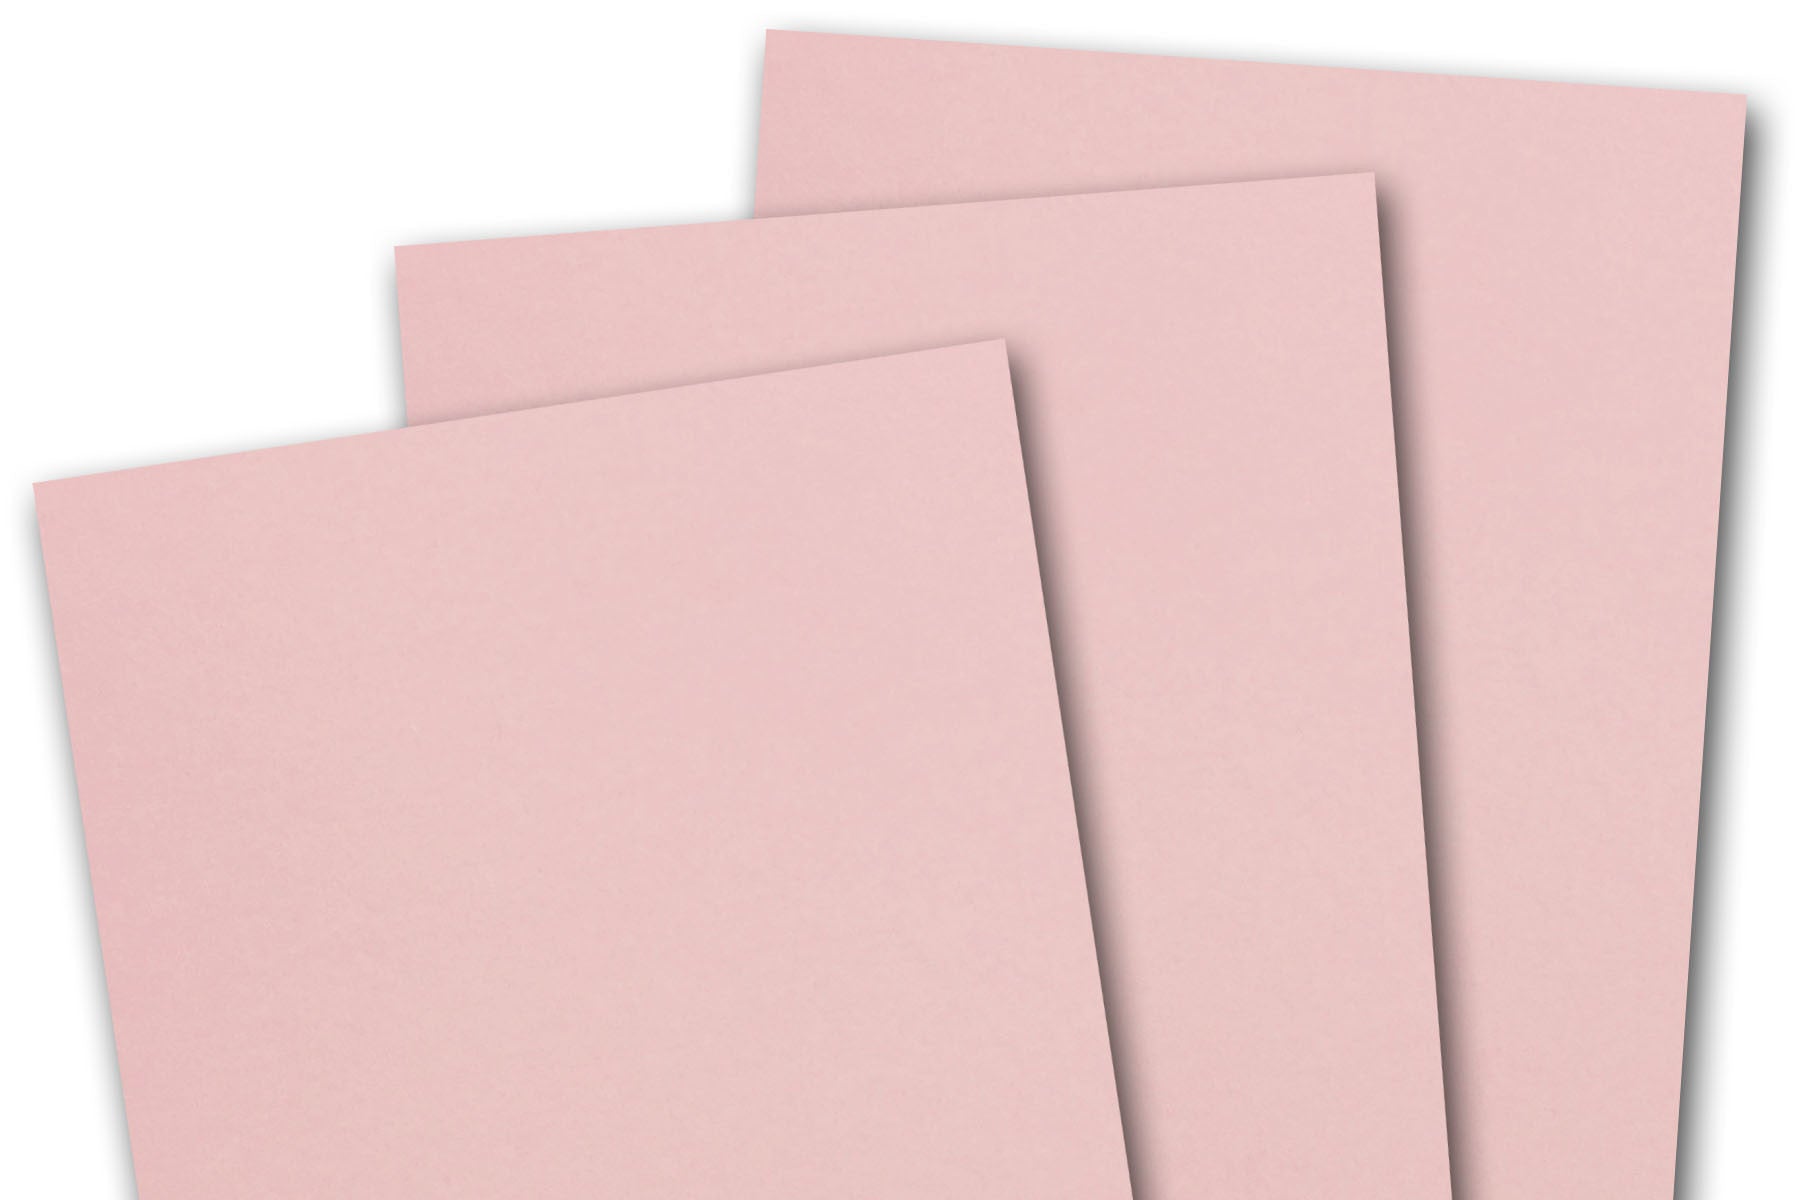 Soft Pink 26-x-40 BASIS Paper, 1 (requires 20 sheet minimum), 216 GSM (80lb